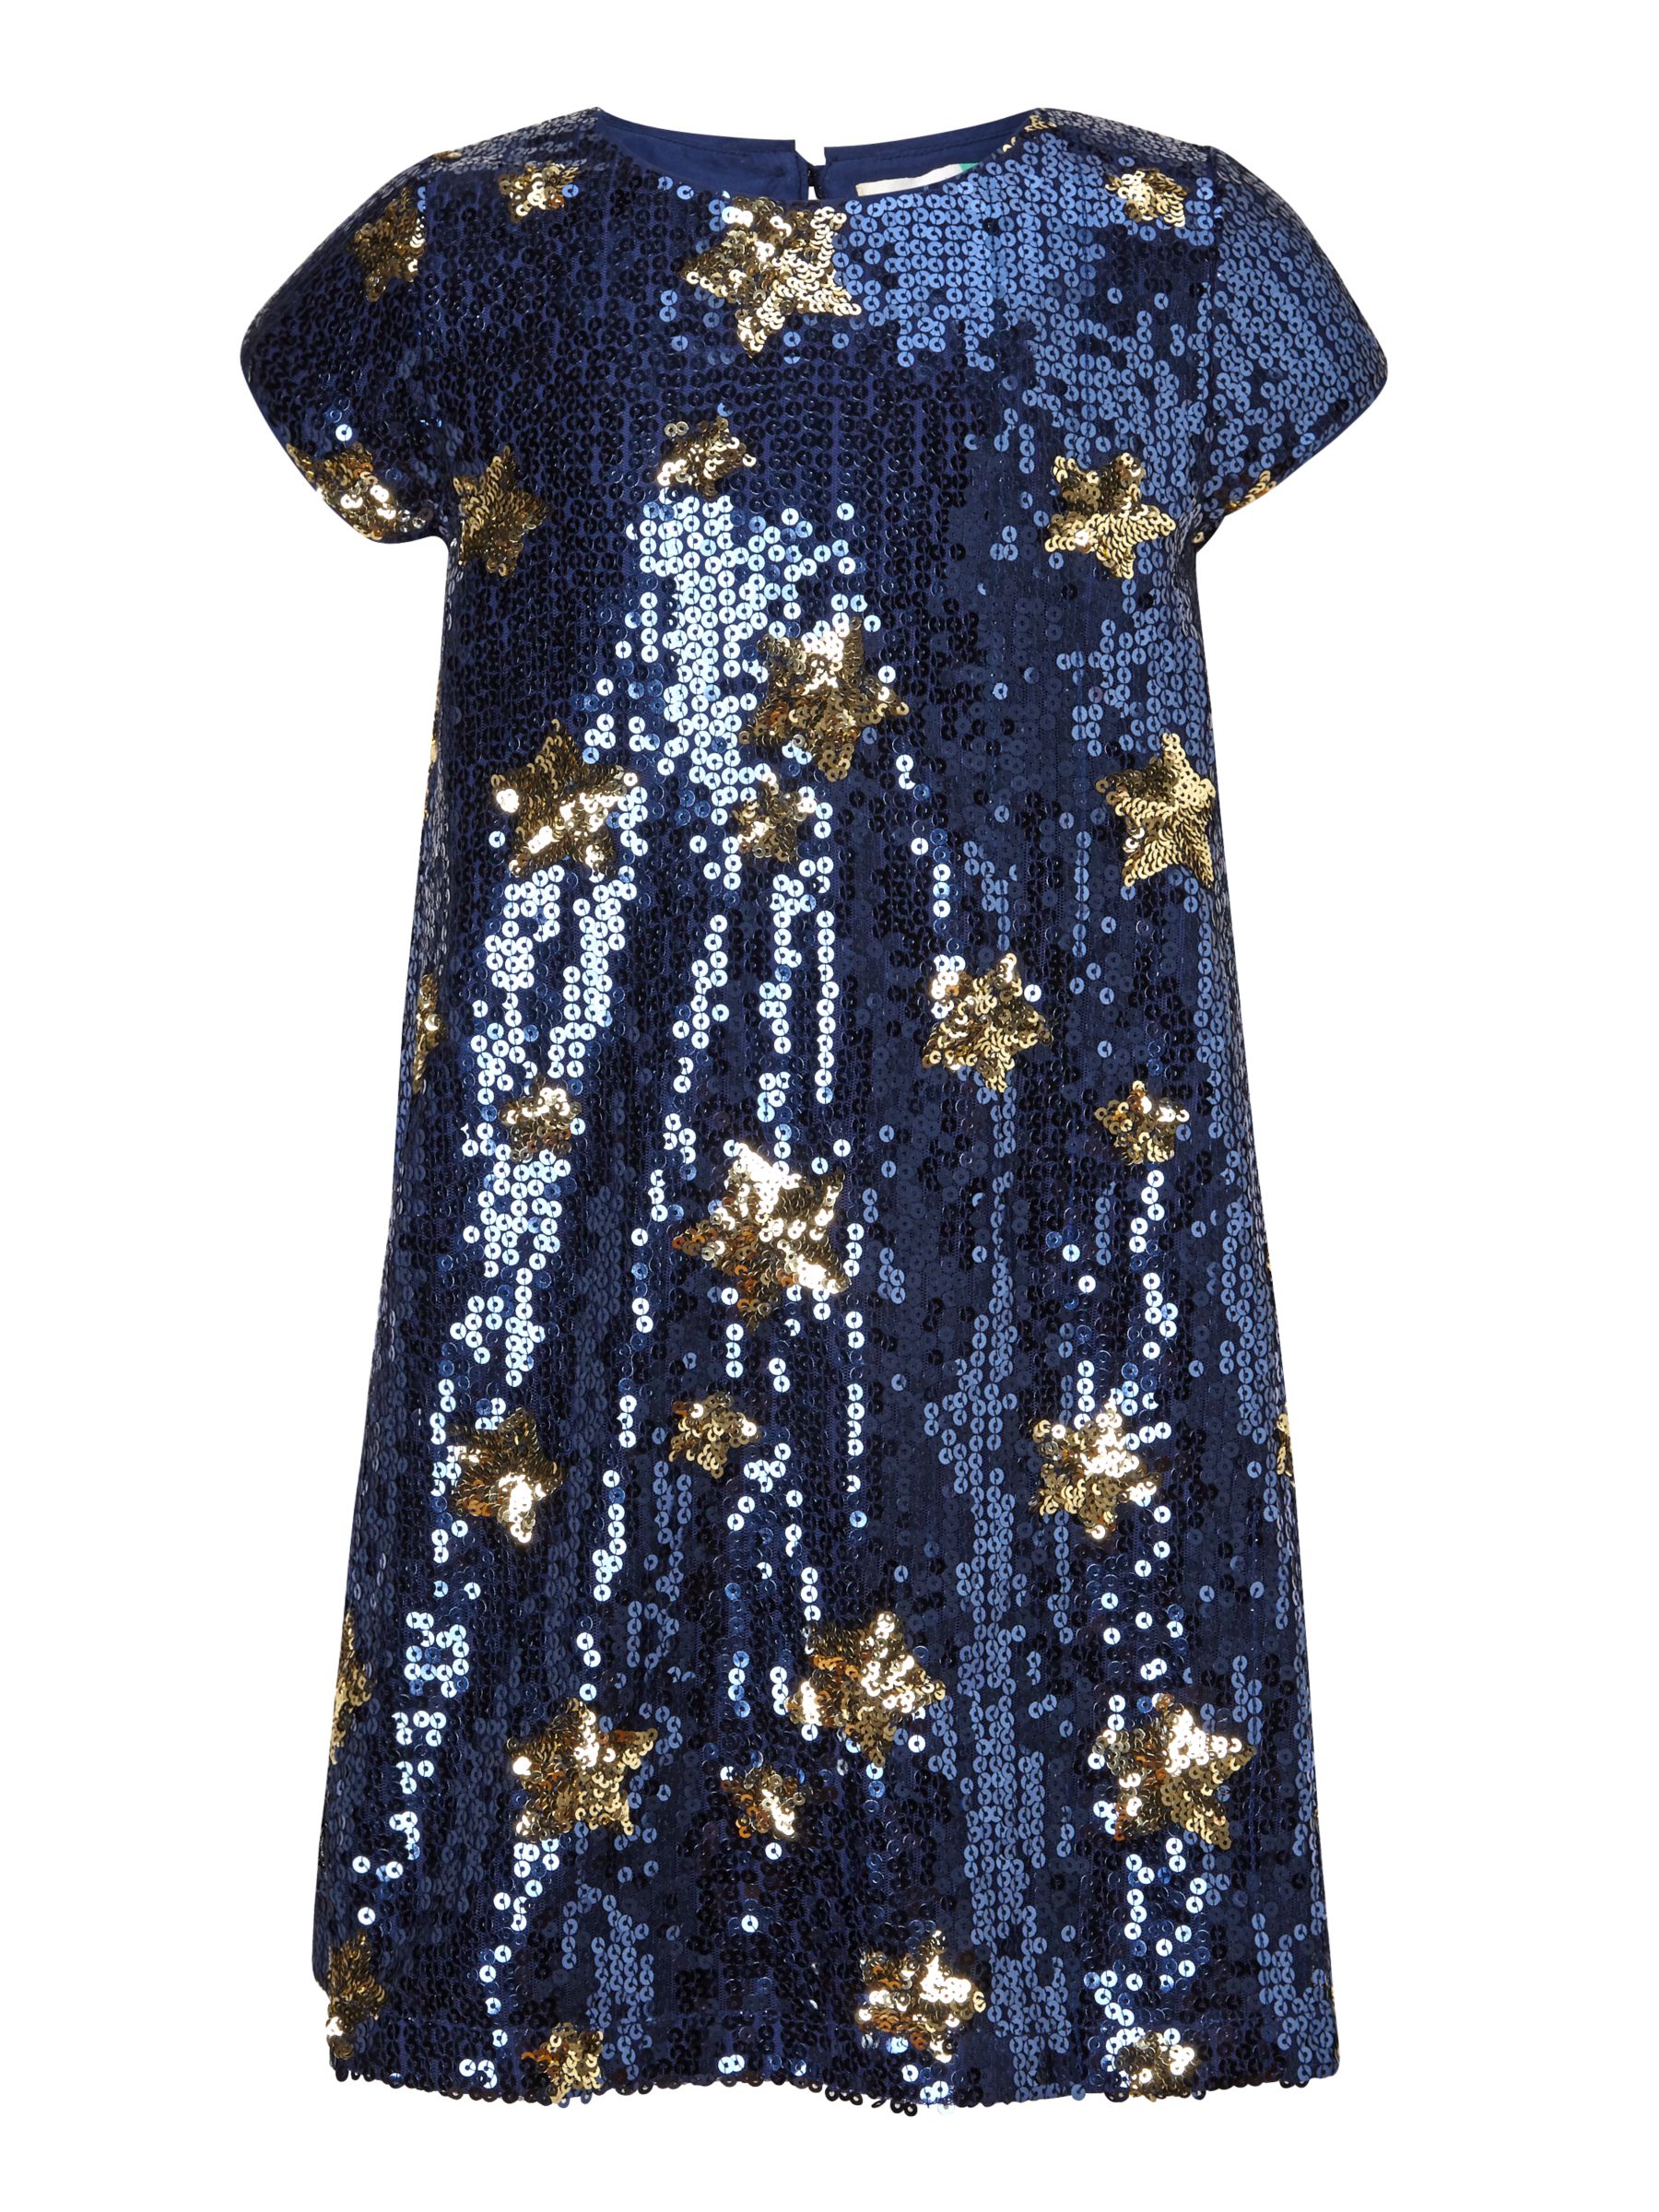 John Lewis & Partners Girls' Star Sequin Dress, Navy, 12 years